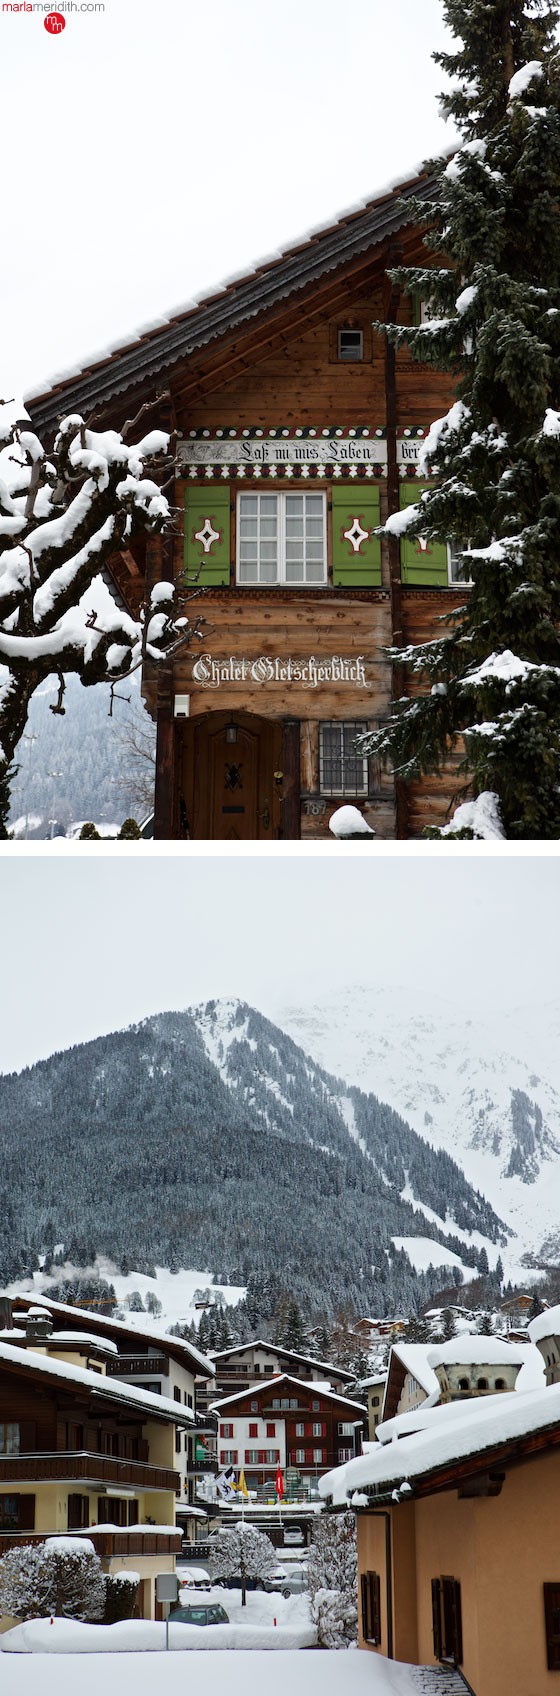 Klosters #Switzerland Ski Trip MarlaMeridith.com ( @marlameridith )